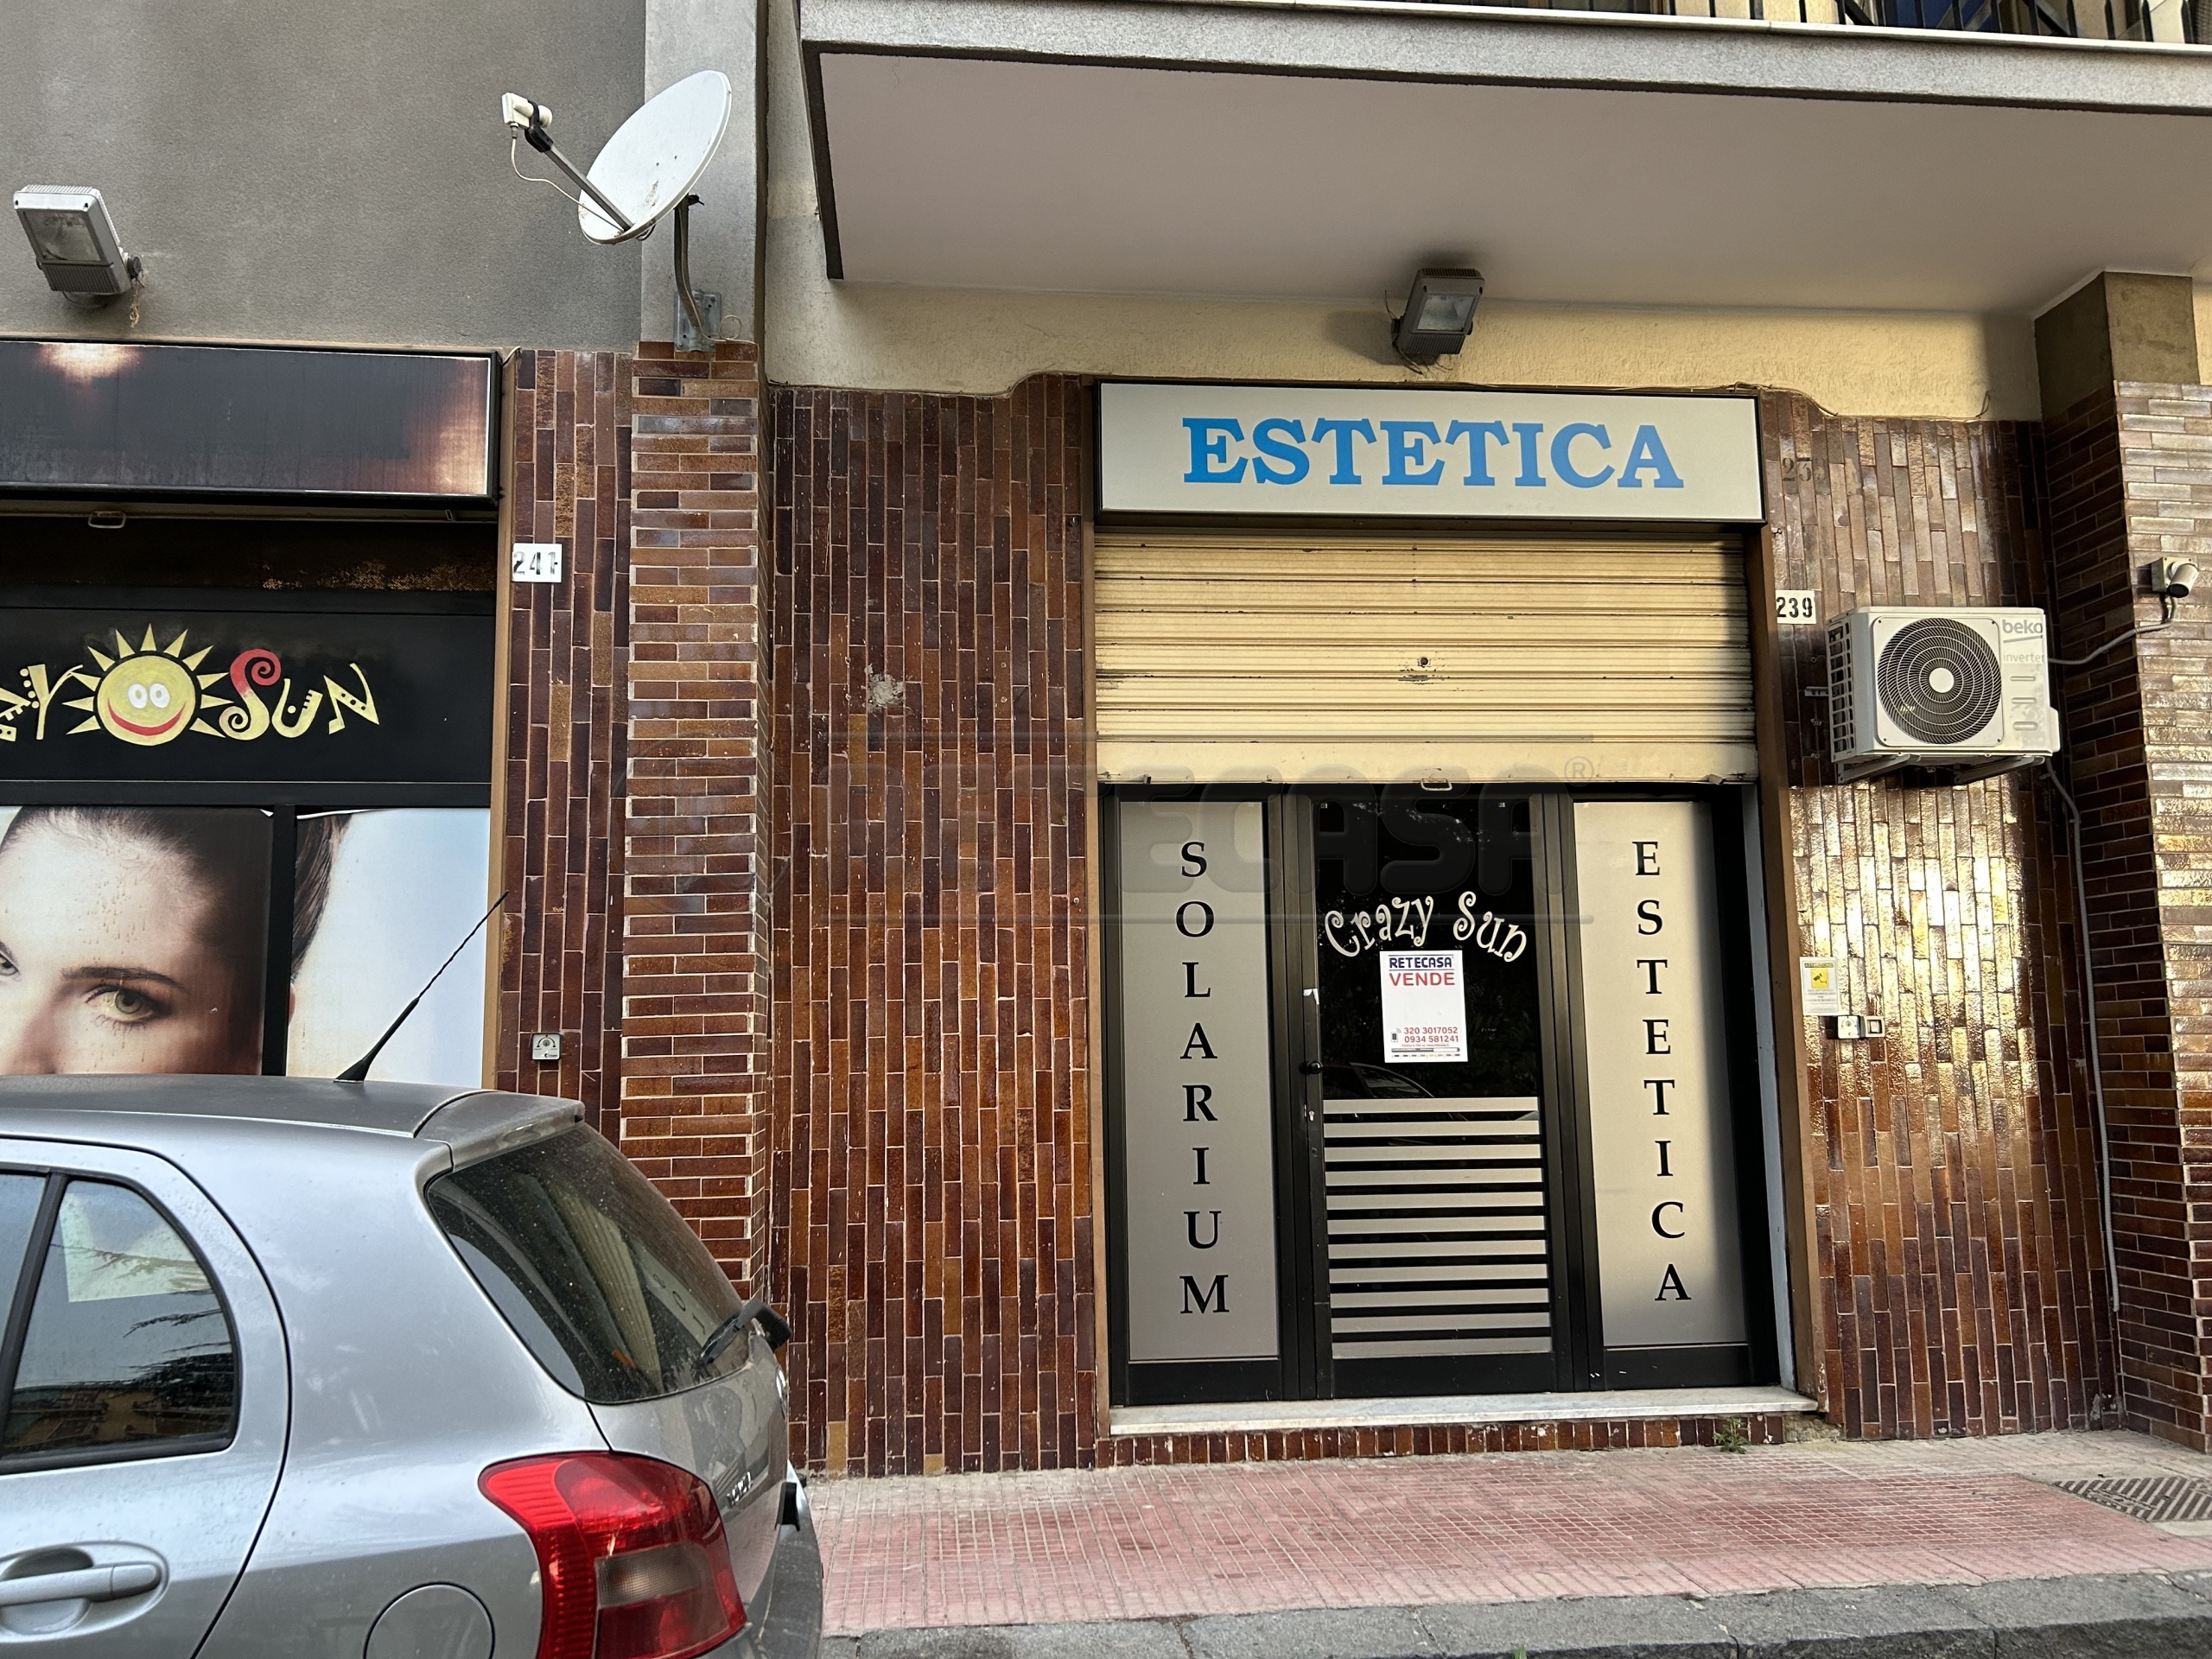 Locale commerciale in vendita in via turati 239, Caltanissetta